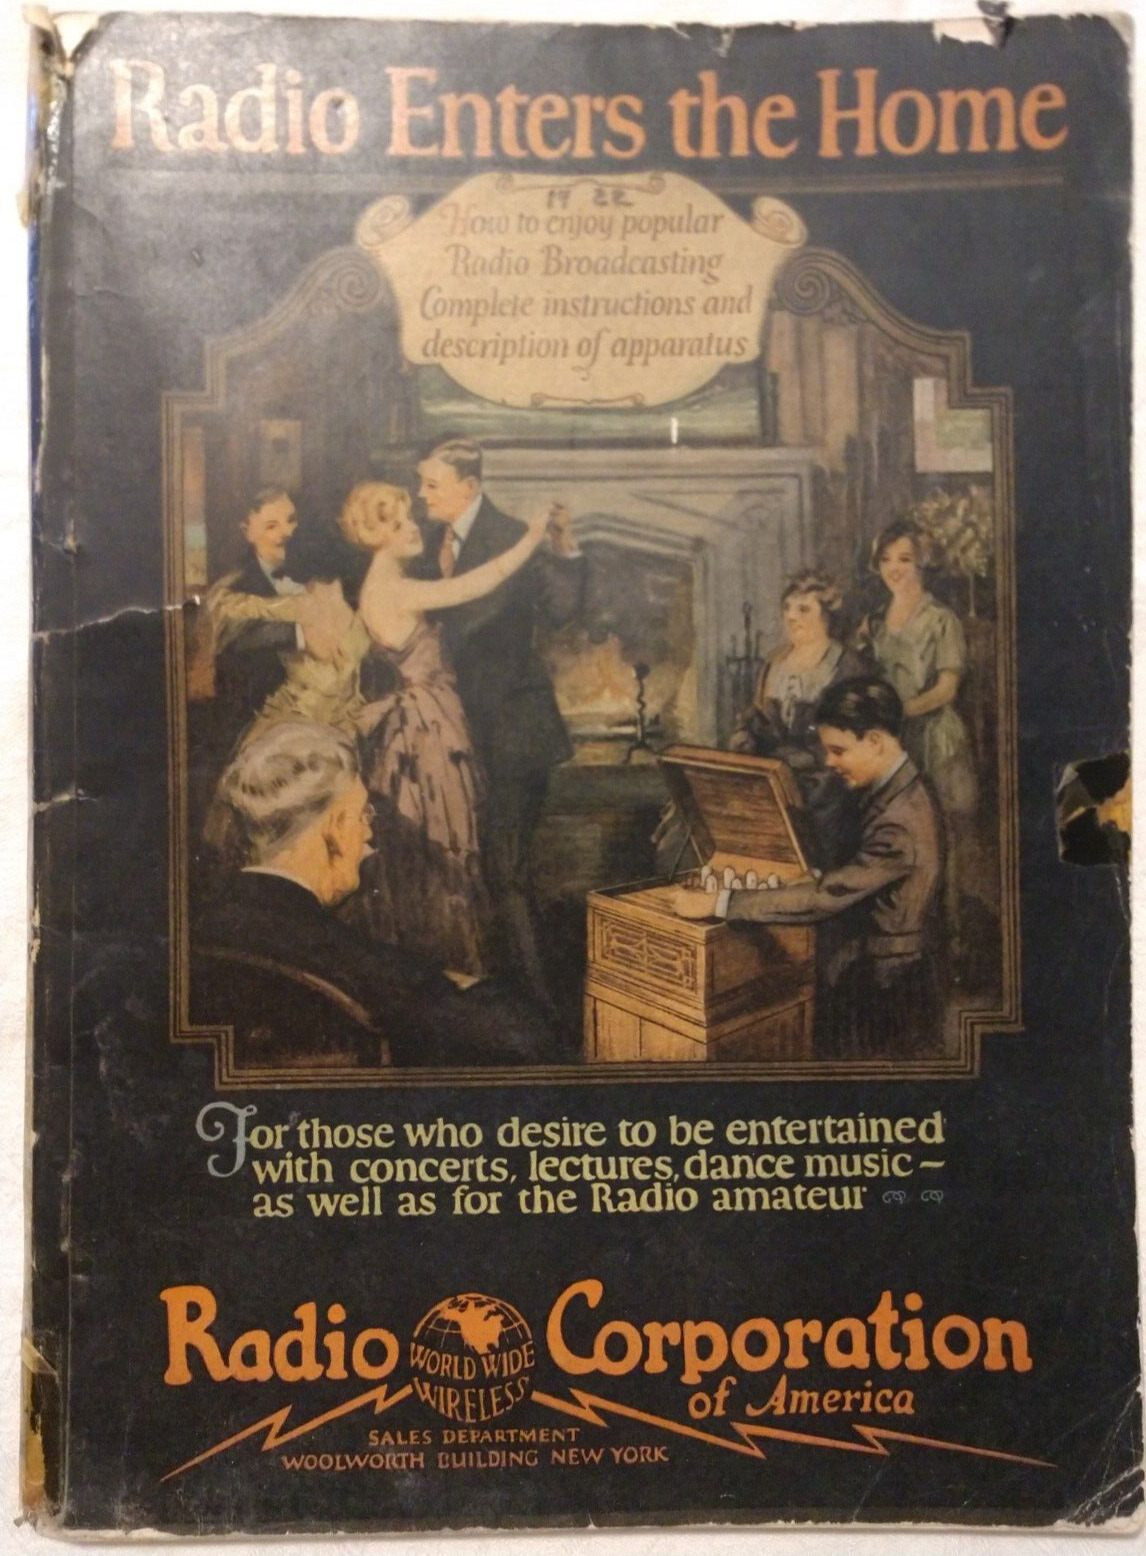 Original 1922 RCA Radio Enters the Home Booklet early radio documentation